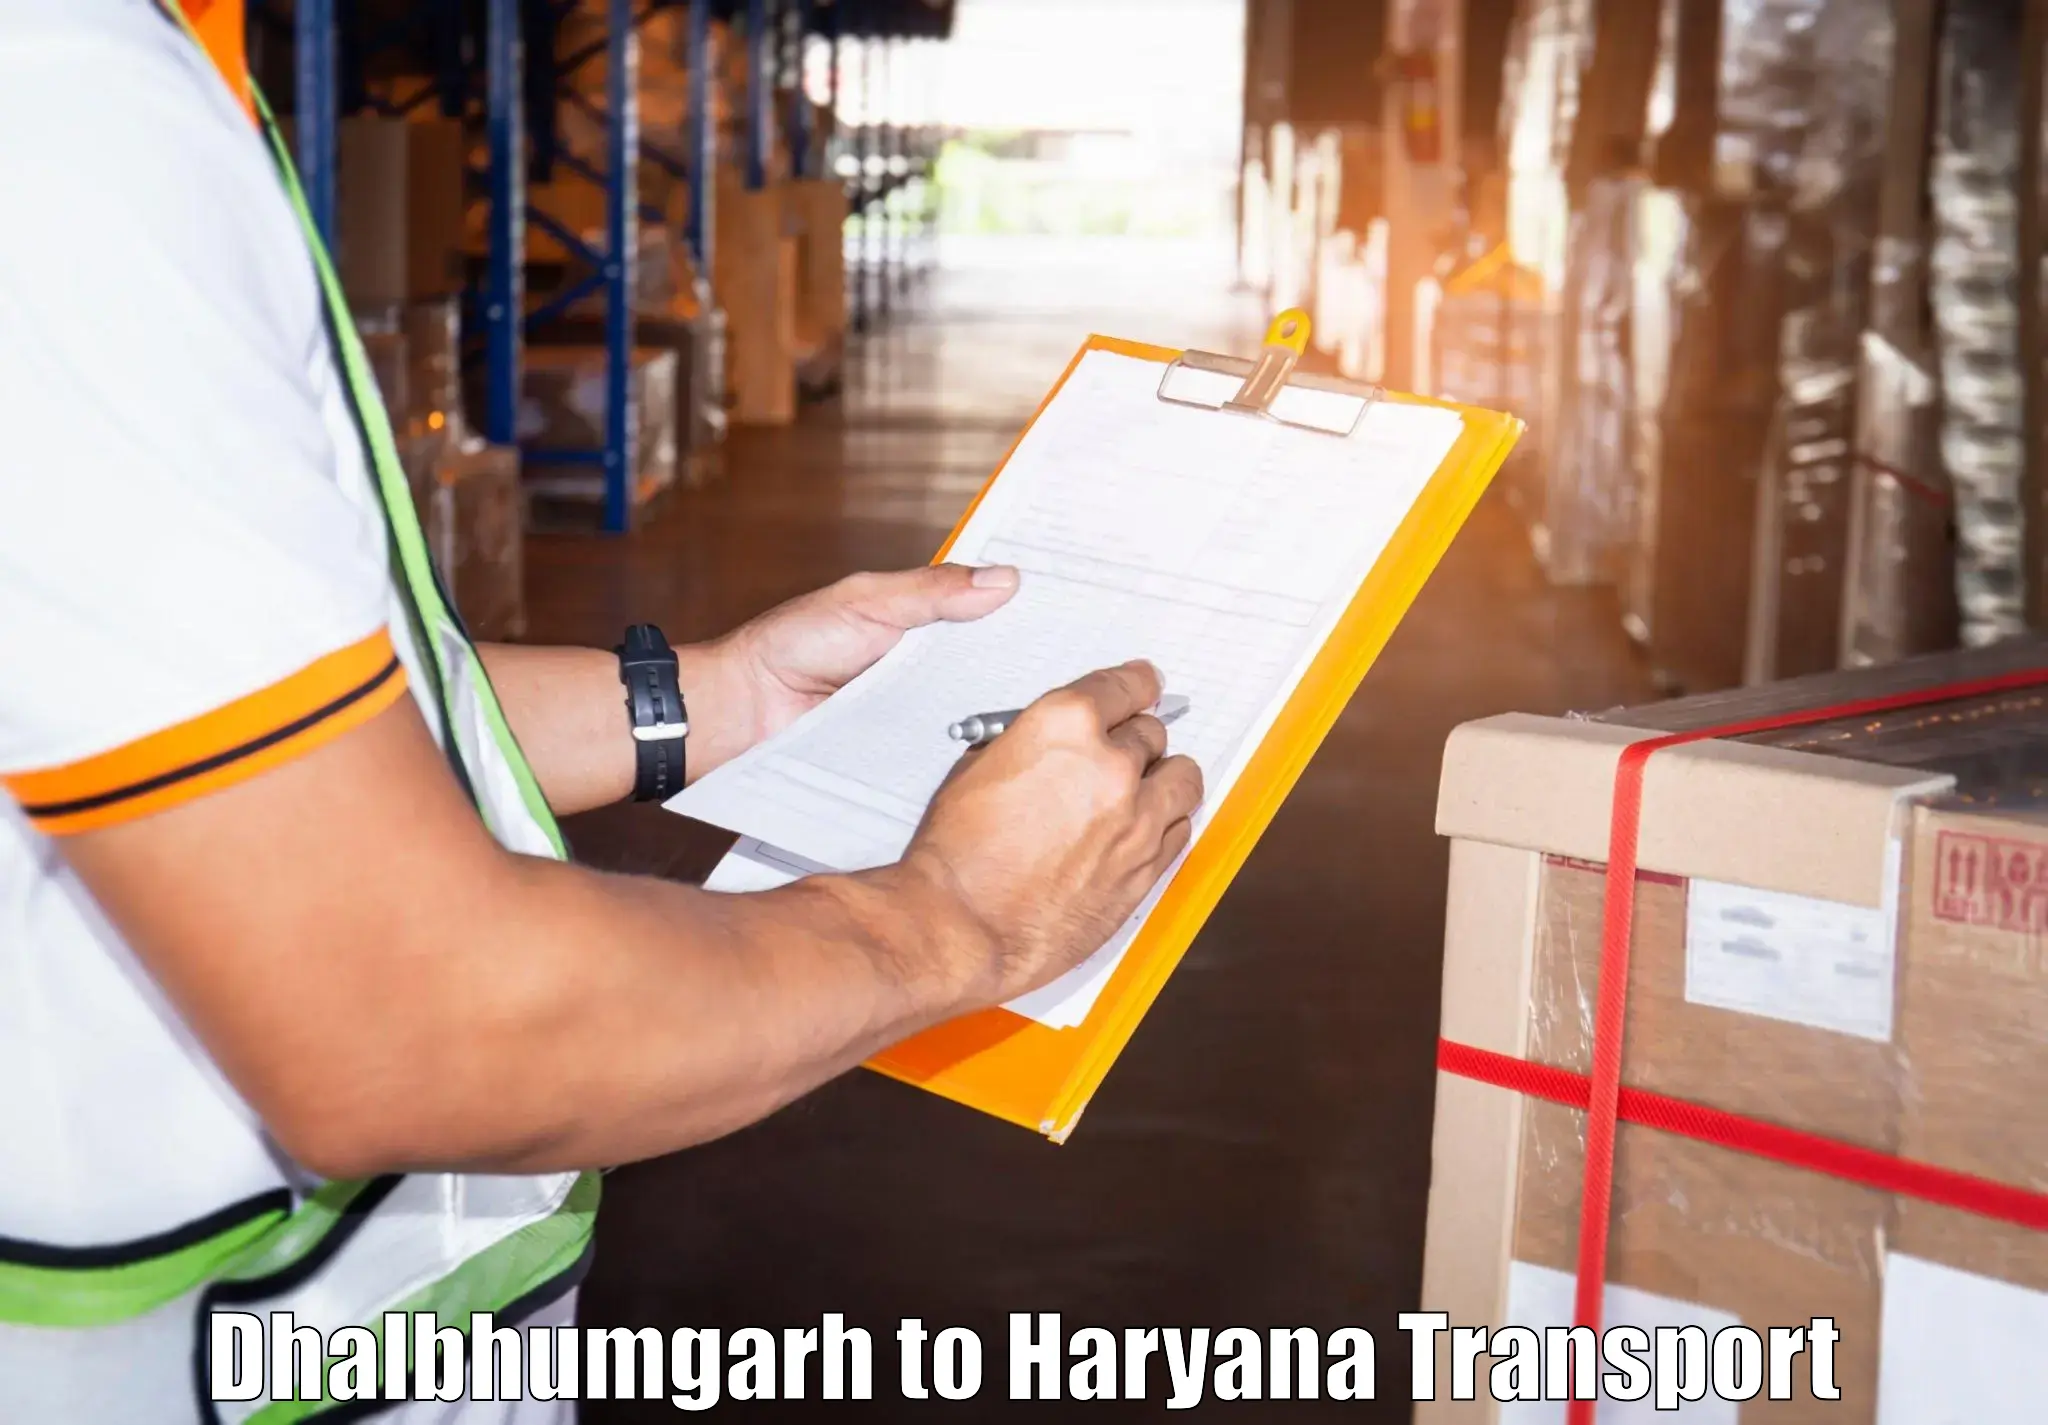 Transport shared services Dhalbhumgarh to Rewari